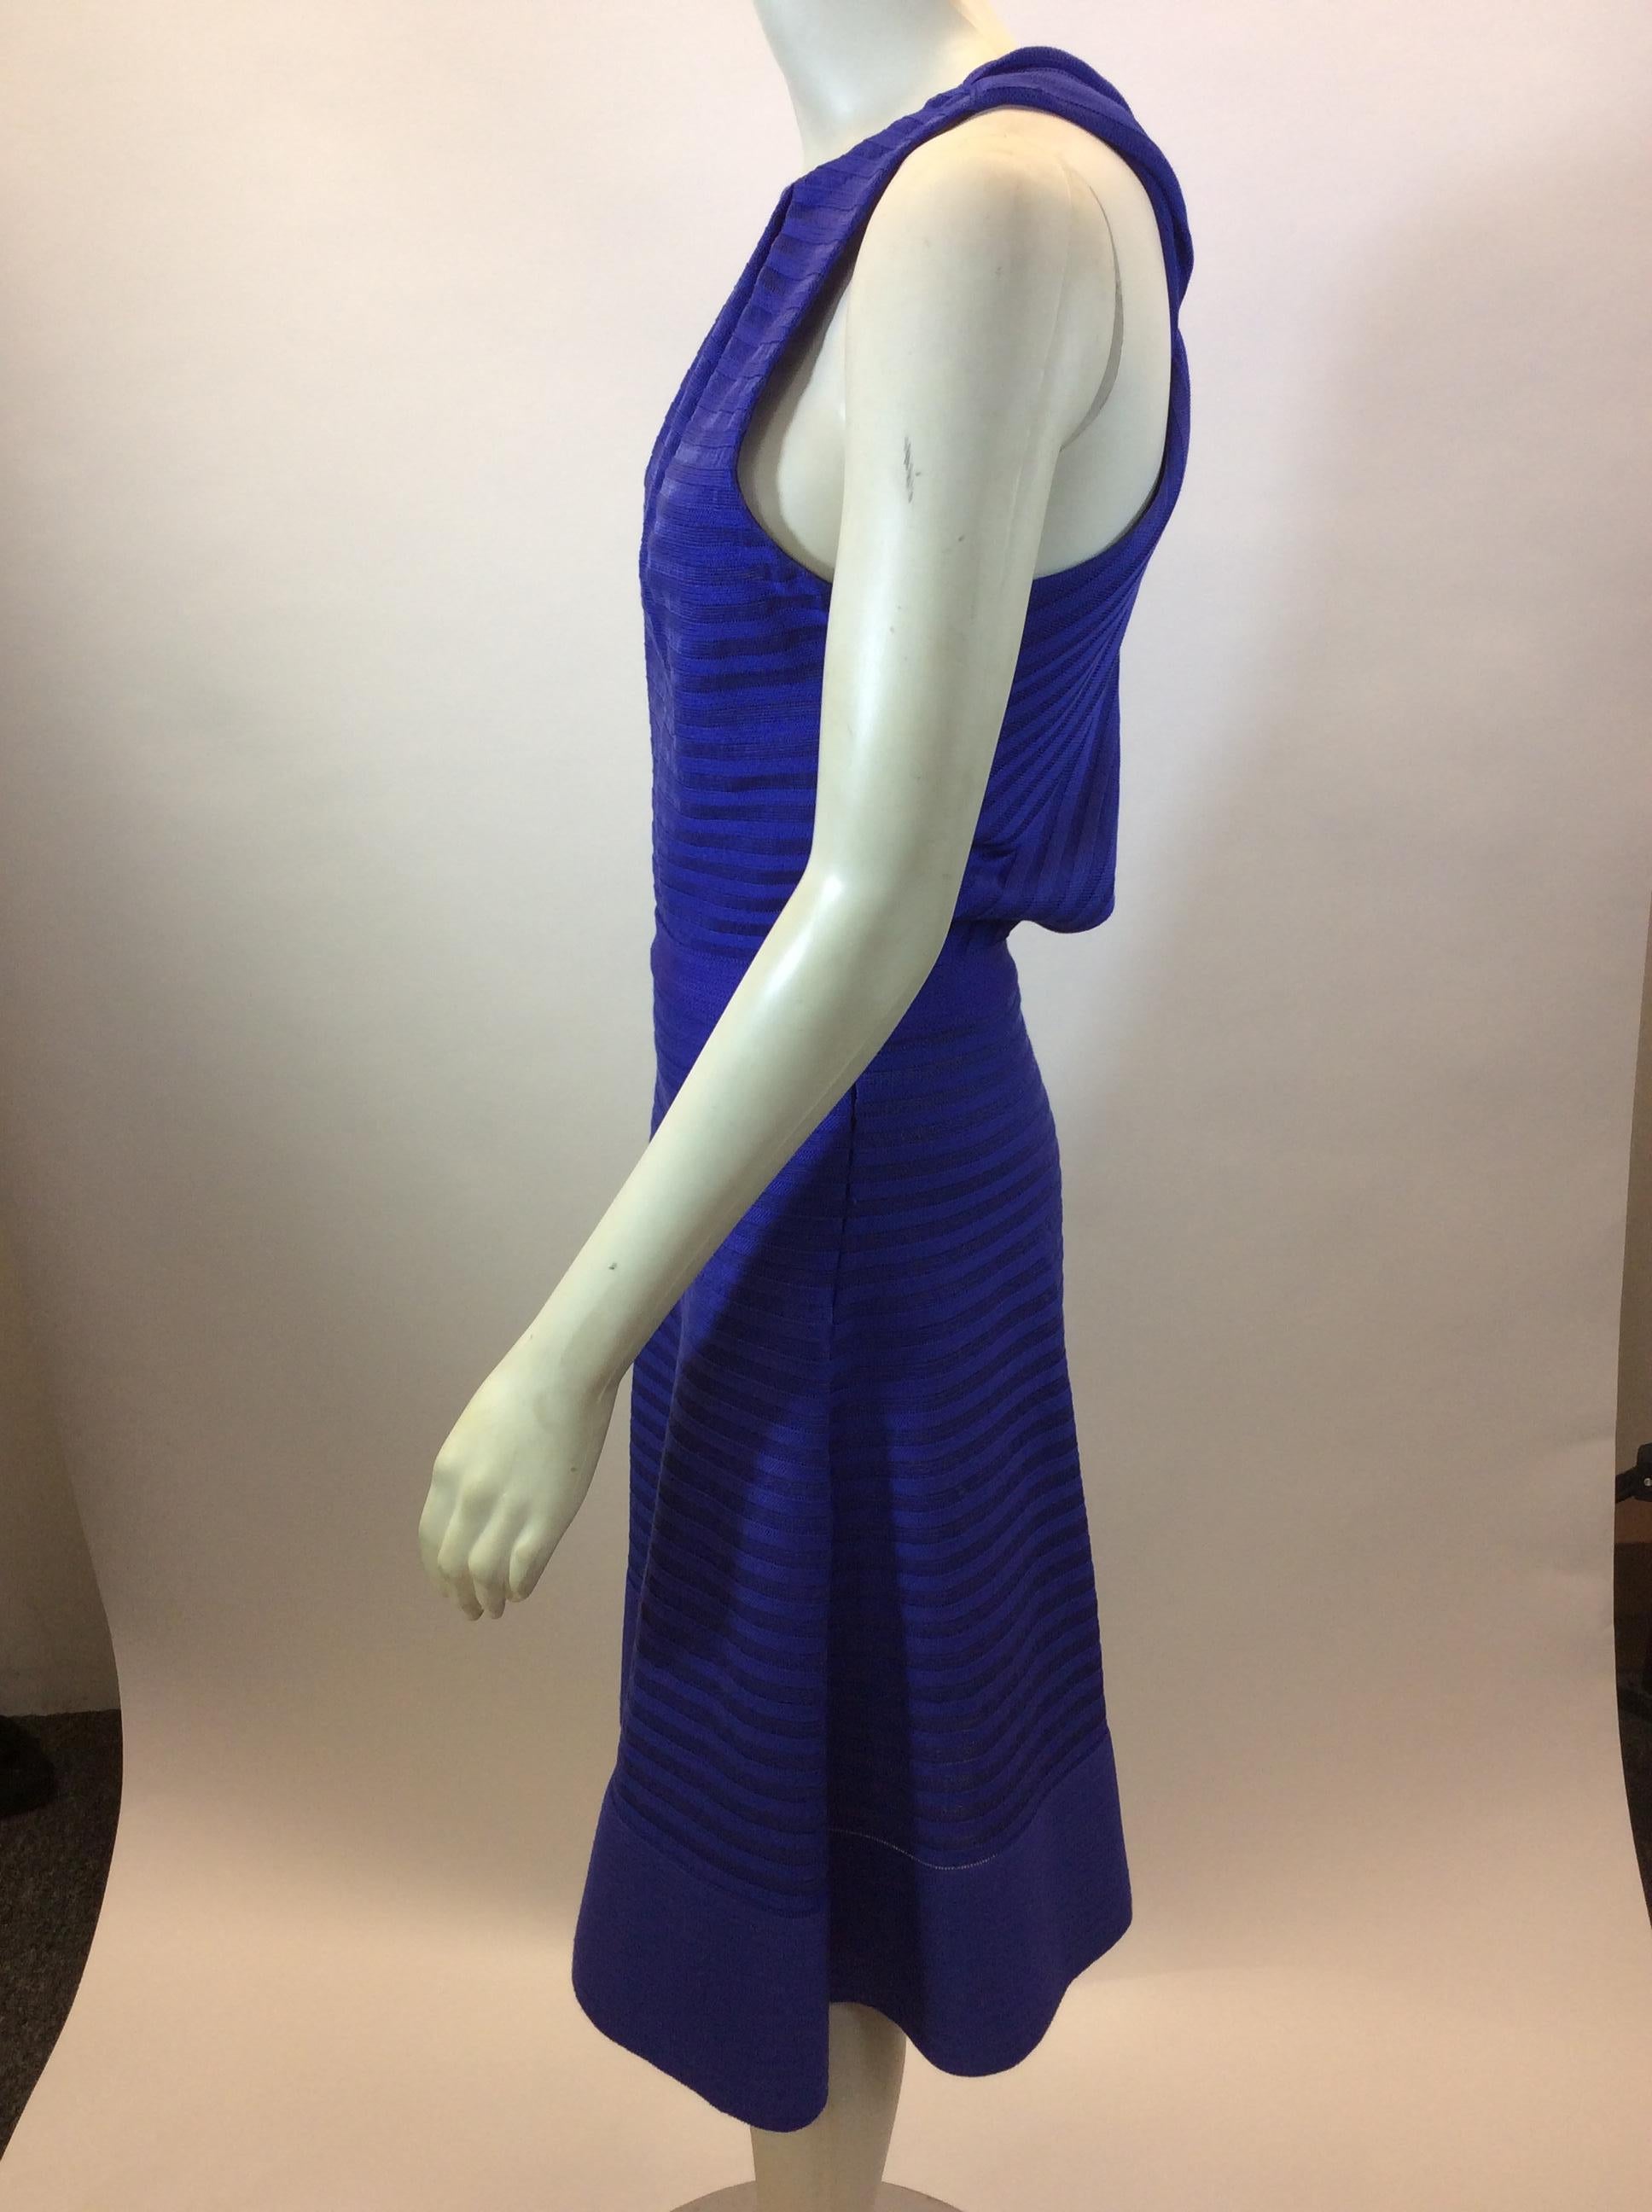 Christian Dior Purple Silk Dress
$299
Made in France
85% Silk, 15% Polyamide
Size 8
Length 40